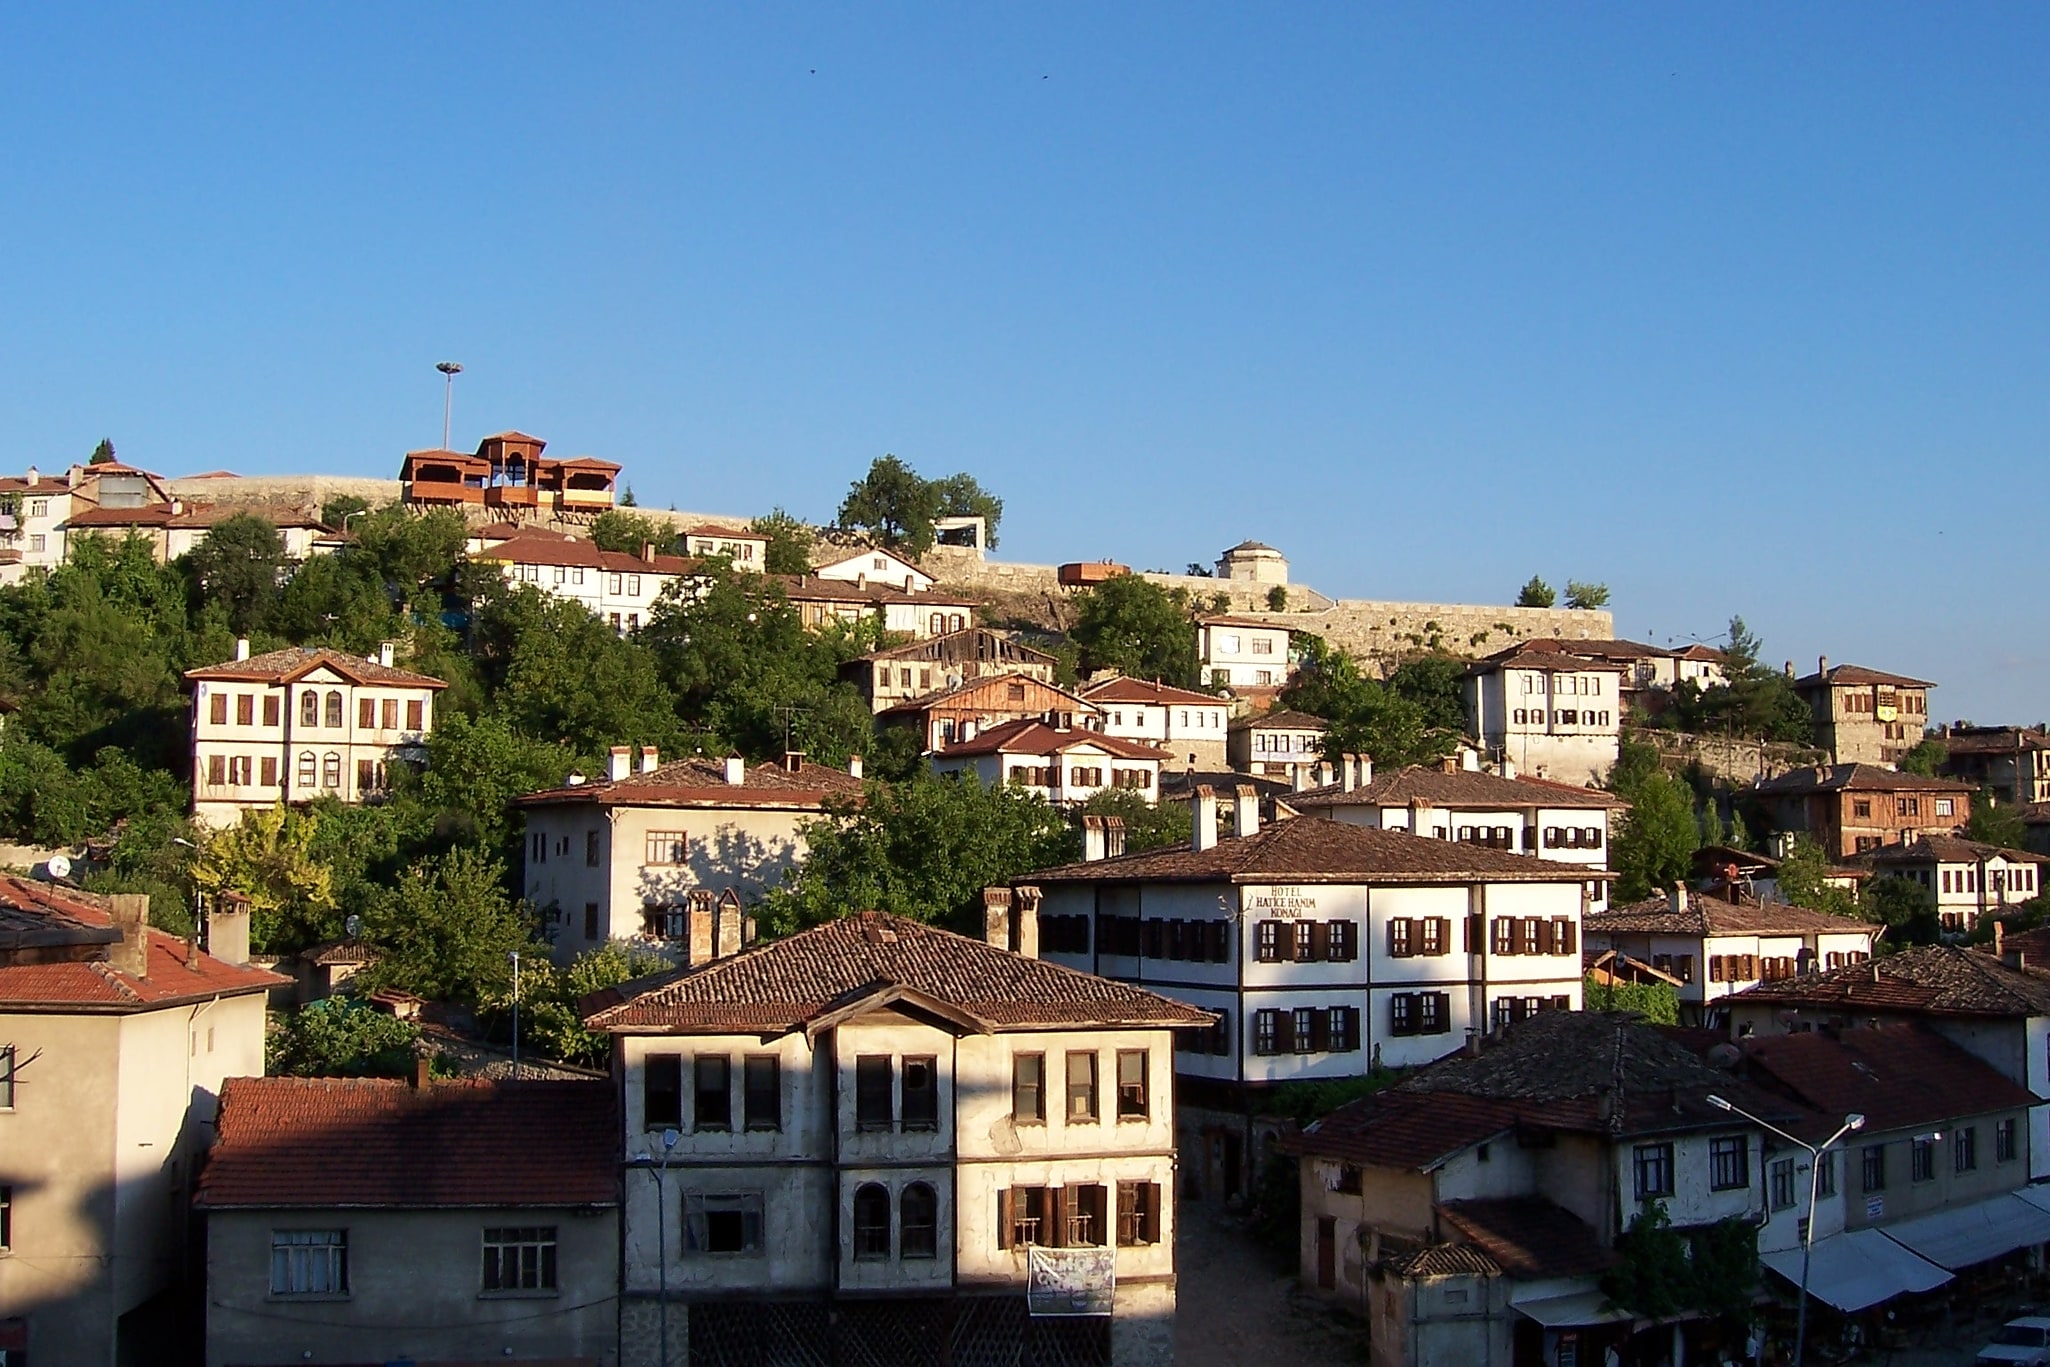 Safranbolu, Turkey